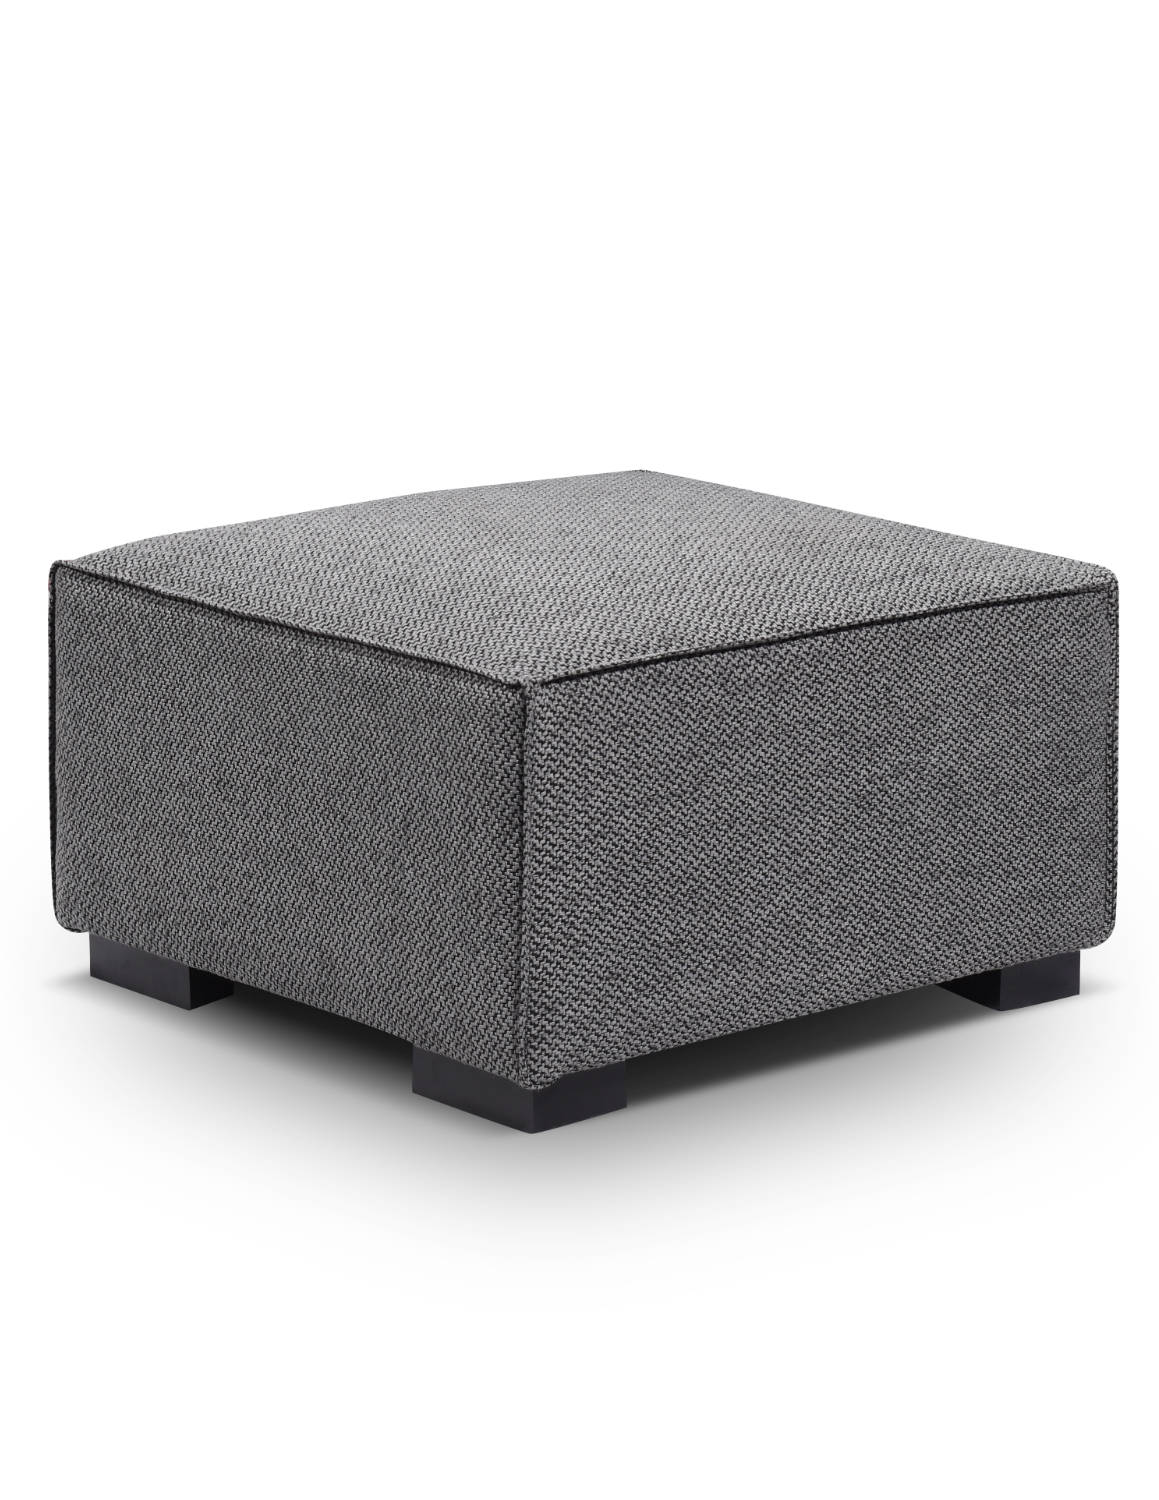 https://expandfurniture.com/wp-content/uploads/2017/05/Soft-Cube-Modern-grey-sofa-Modular-Ottoman-Module-from-angle.jpg